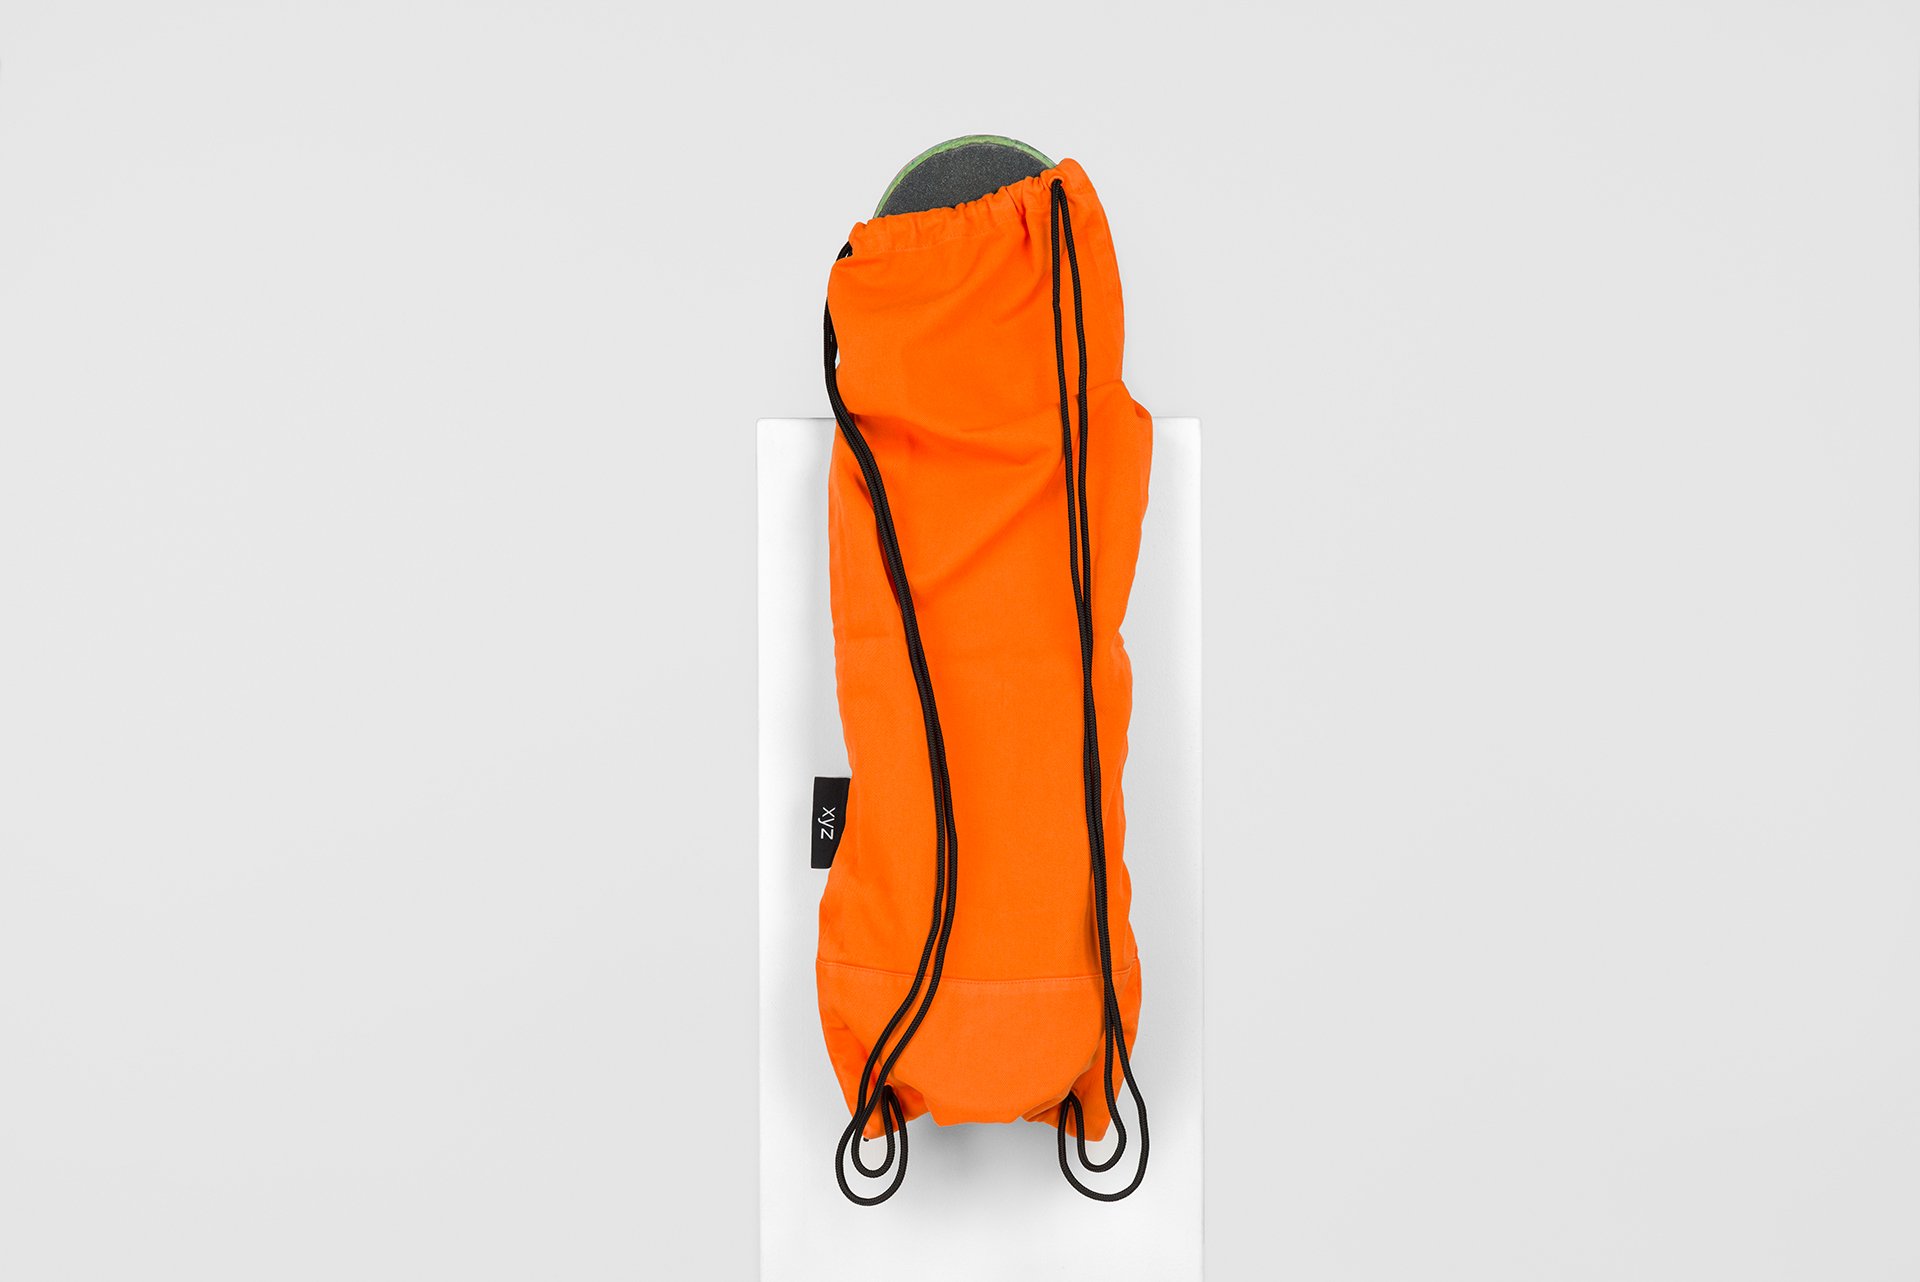 Image of orange skate bag